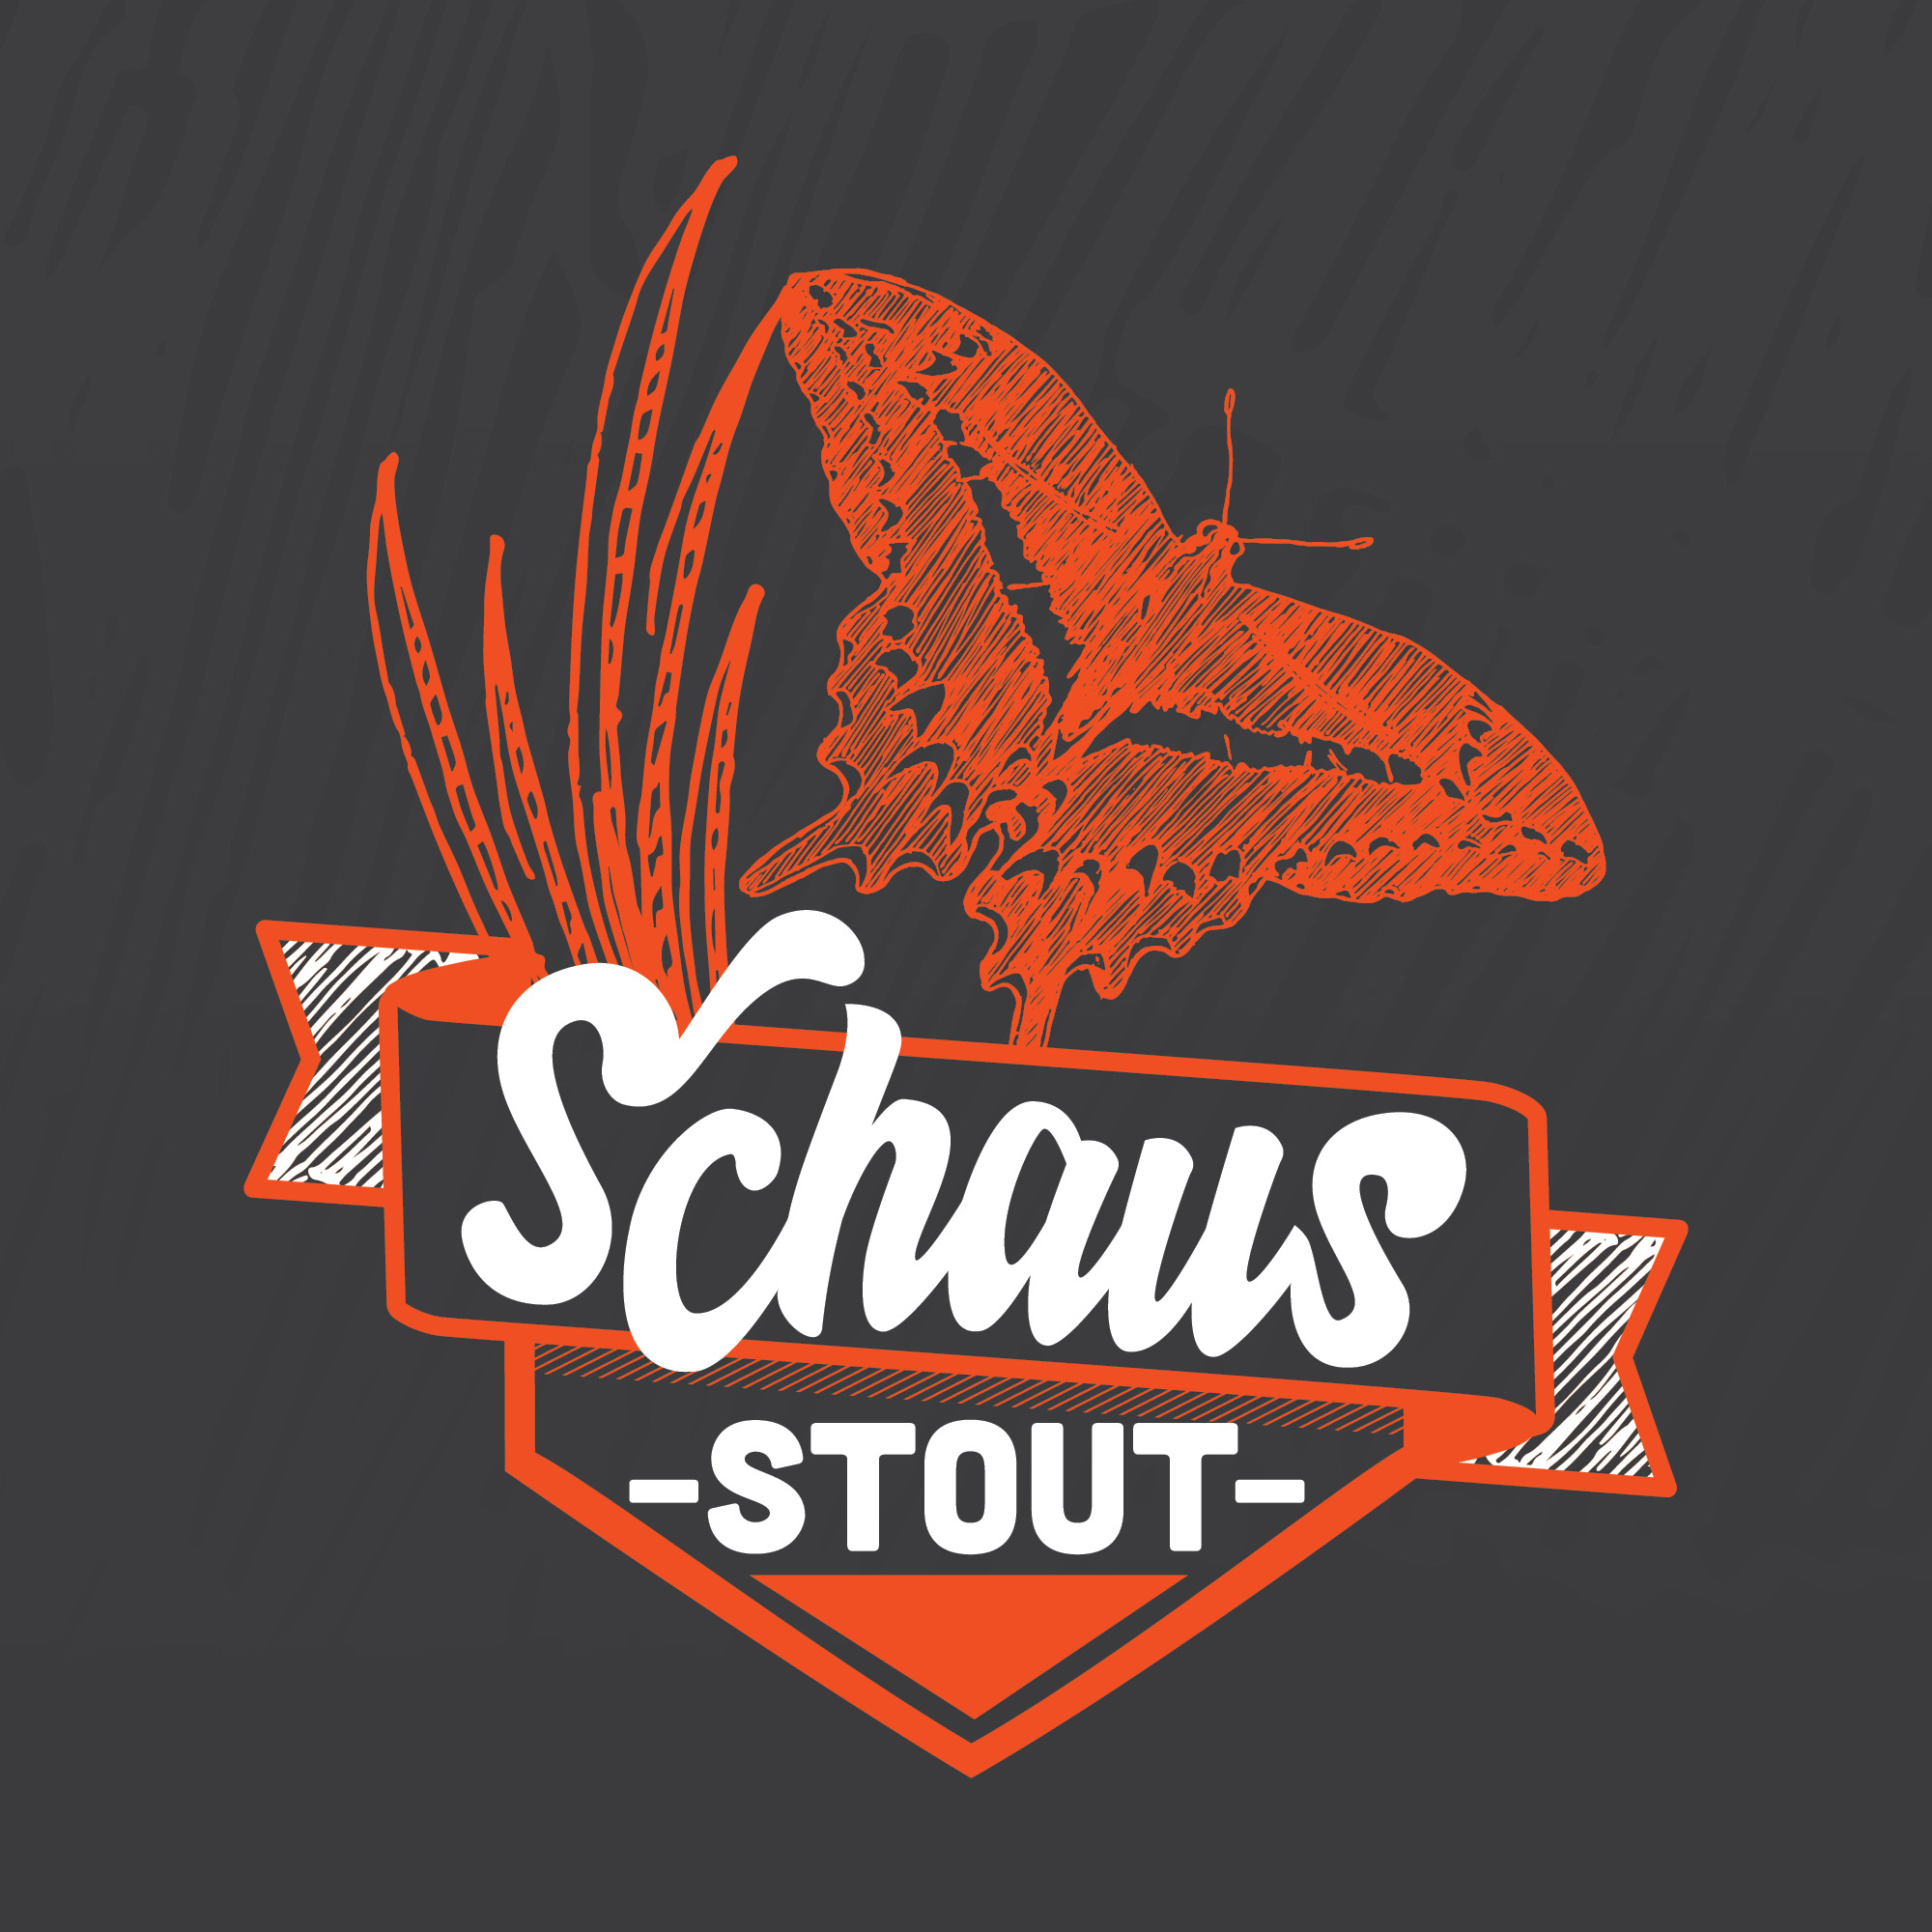 Schaus Stout logo - reddish-orange line drawing of the Schaus set against a grey background.